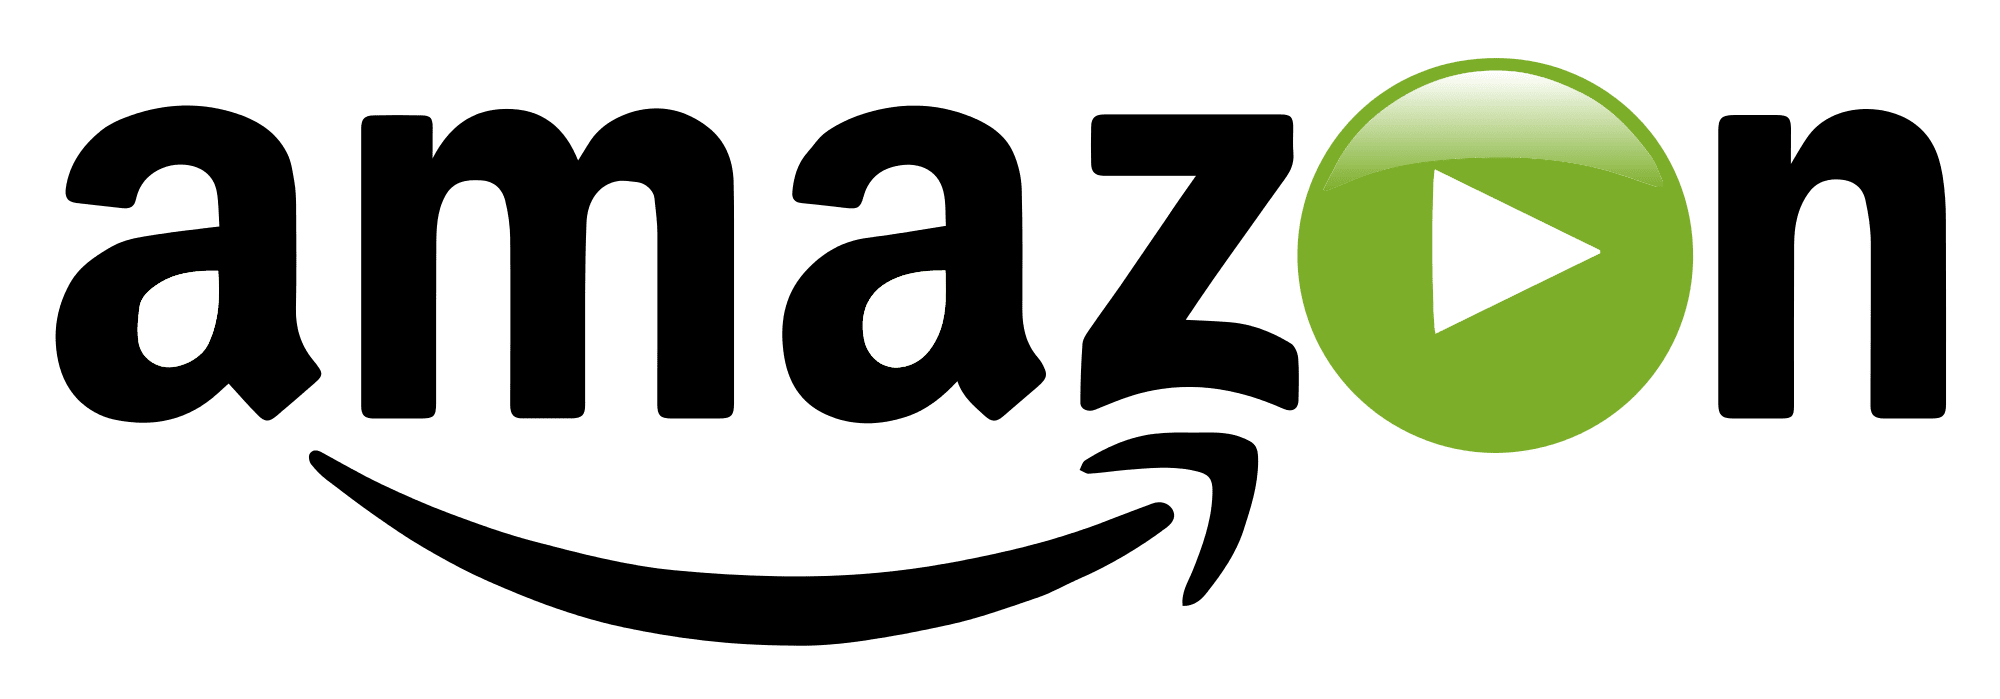 Logotipo da Amazon